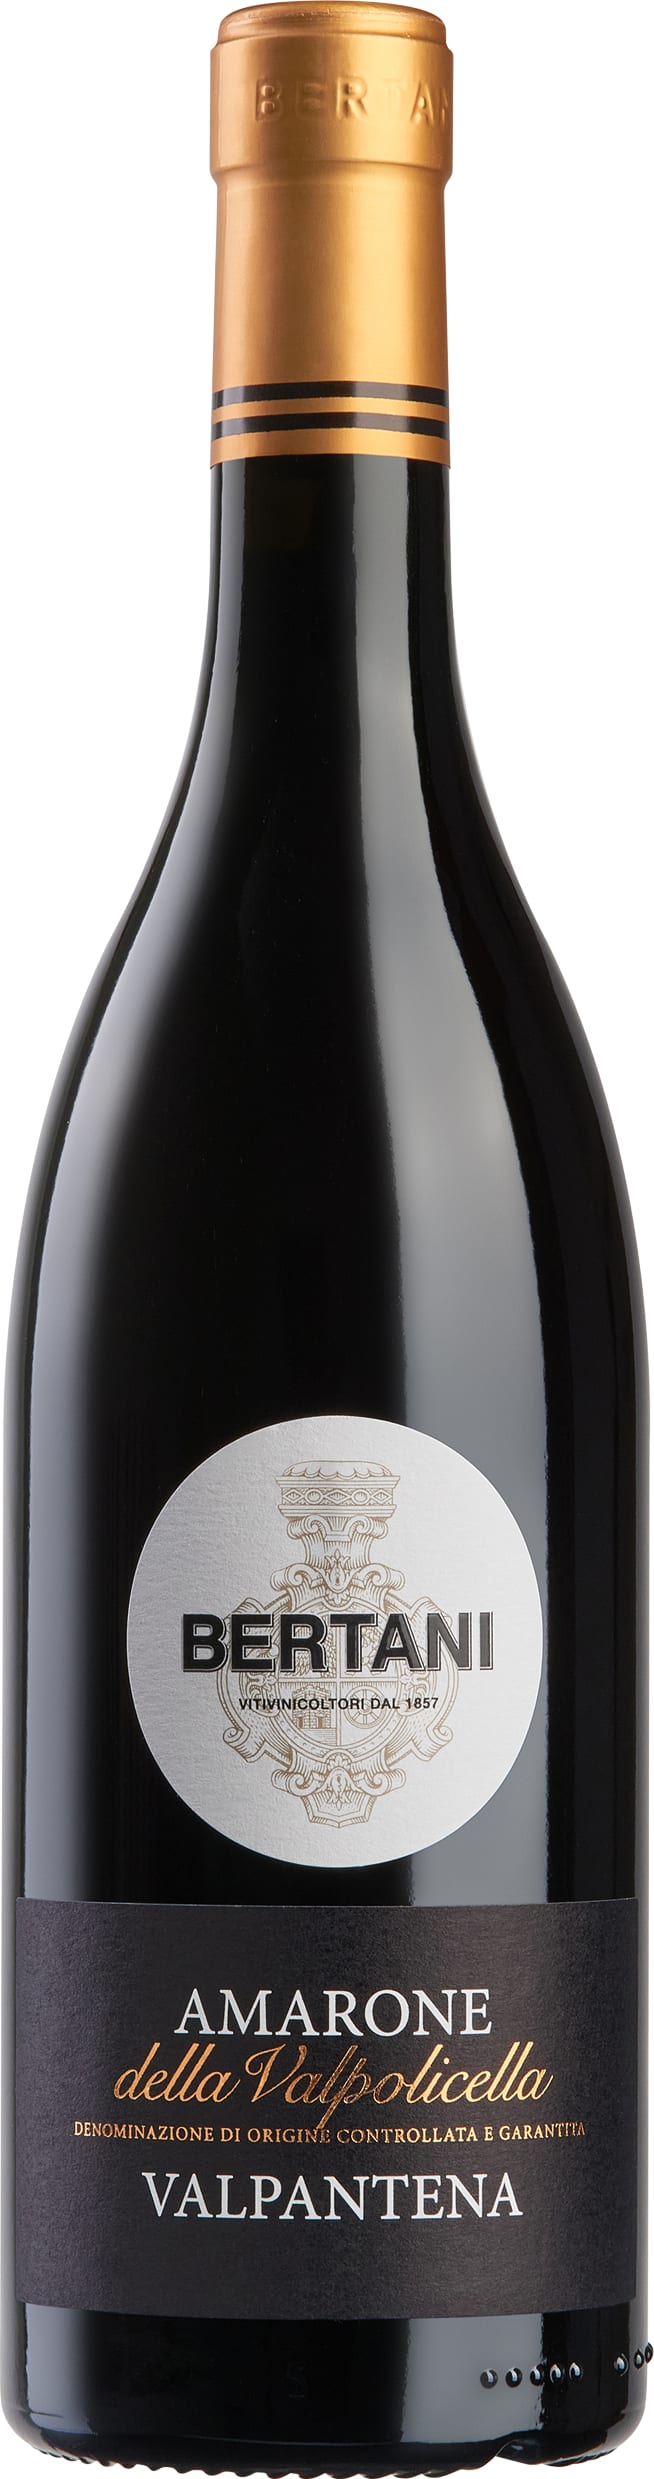 Bertani Amarone Valpantena DOCG 2021 75cl - Buy Bertani Wines from GREAT WINES DIRECT wine shop